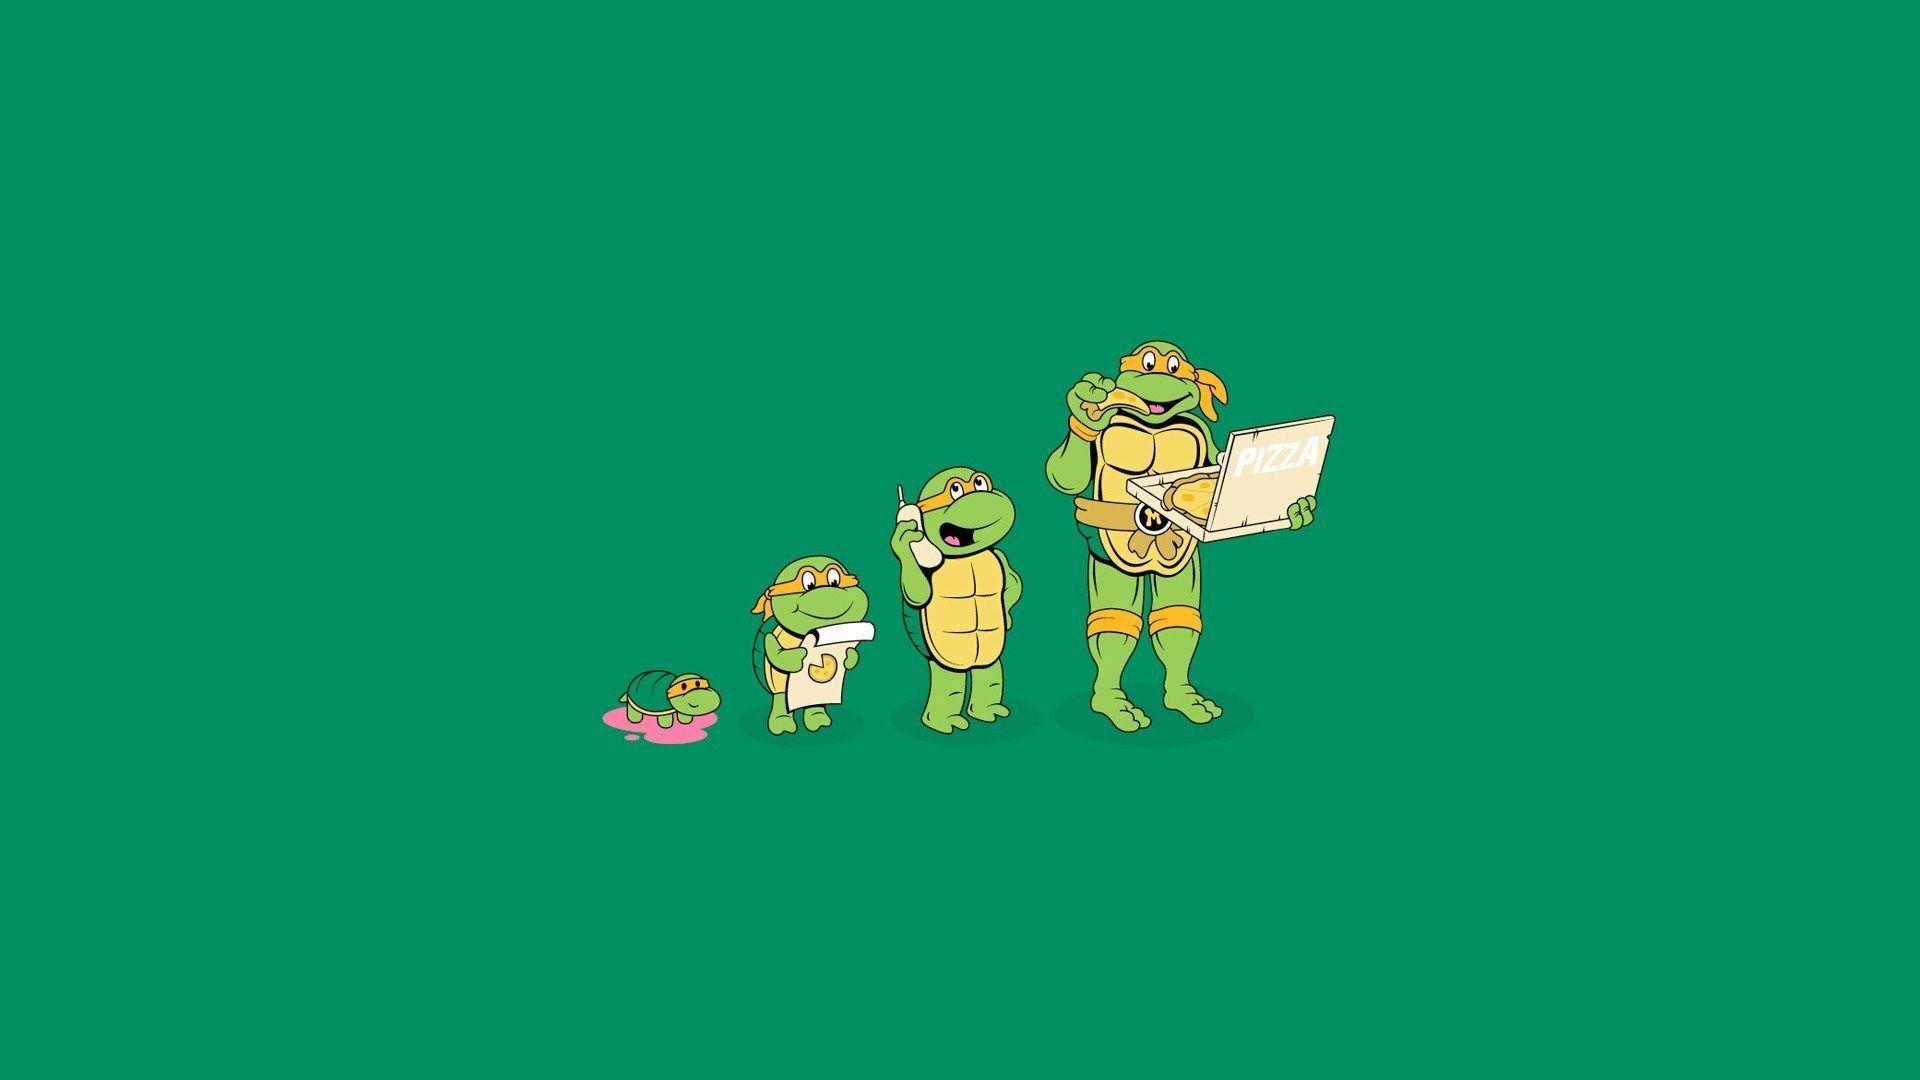 ninja turtles wallpaper tumblr: Yandex.Görsel'de 26 bin görsel